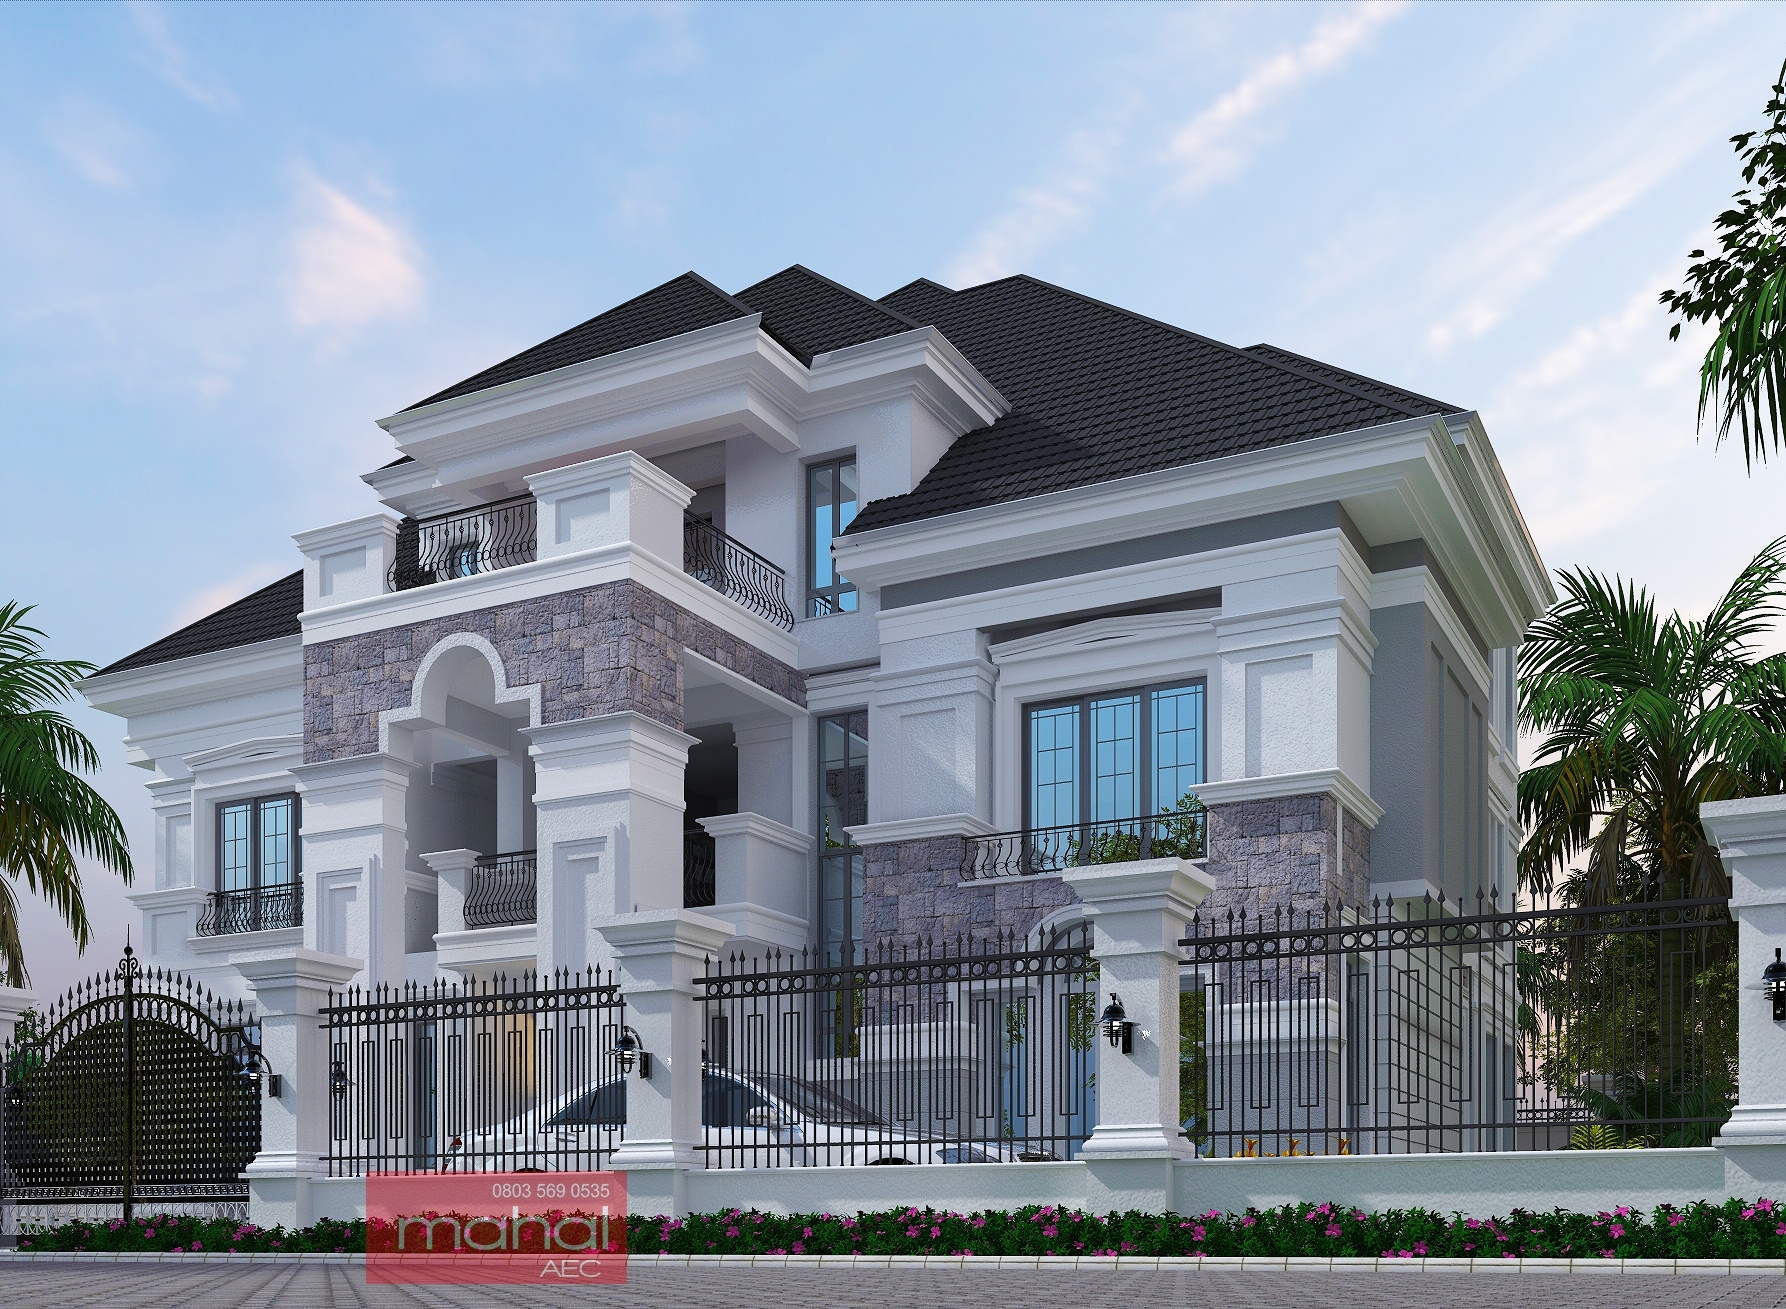 Top contemporary nigerian residential architecture regarding modern house design in nigeria